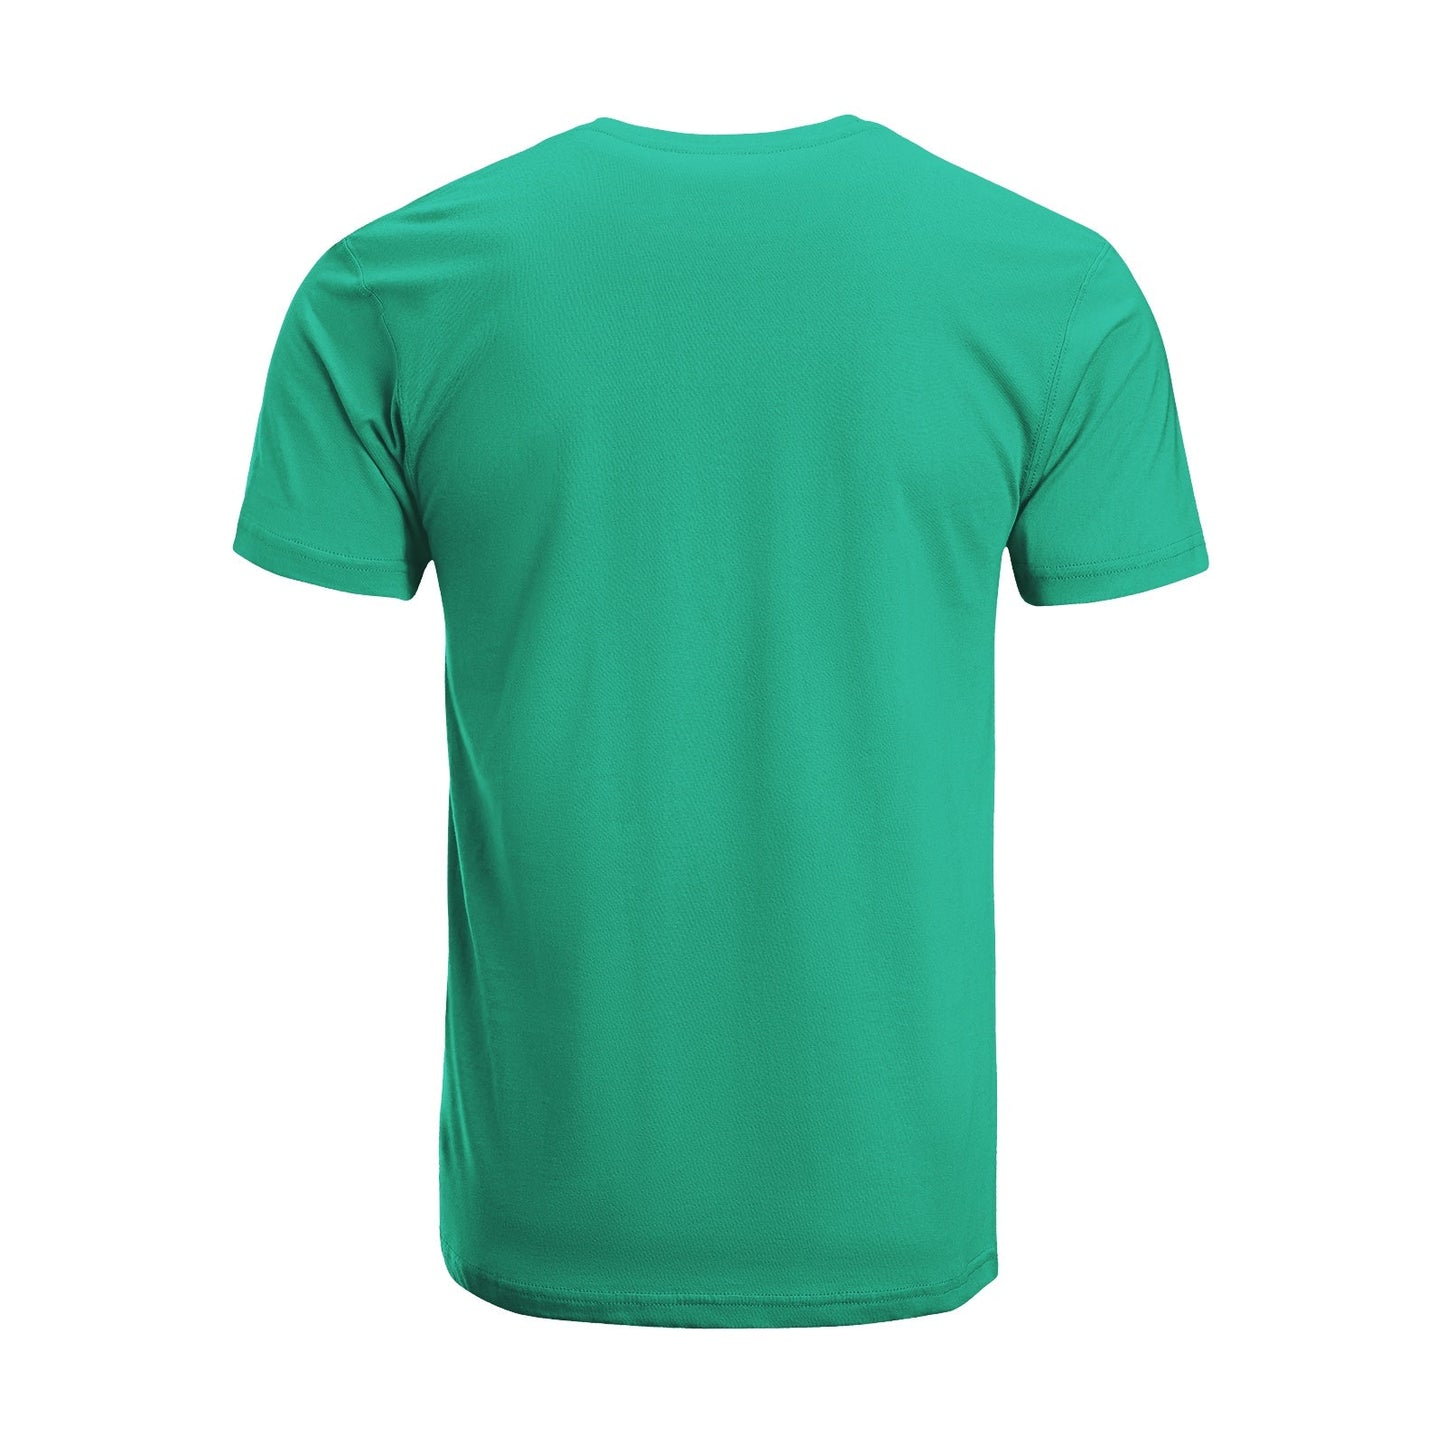 Unisex Short Sleeve Crew Neck Cotton Jersey T-Shirt USA 26